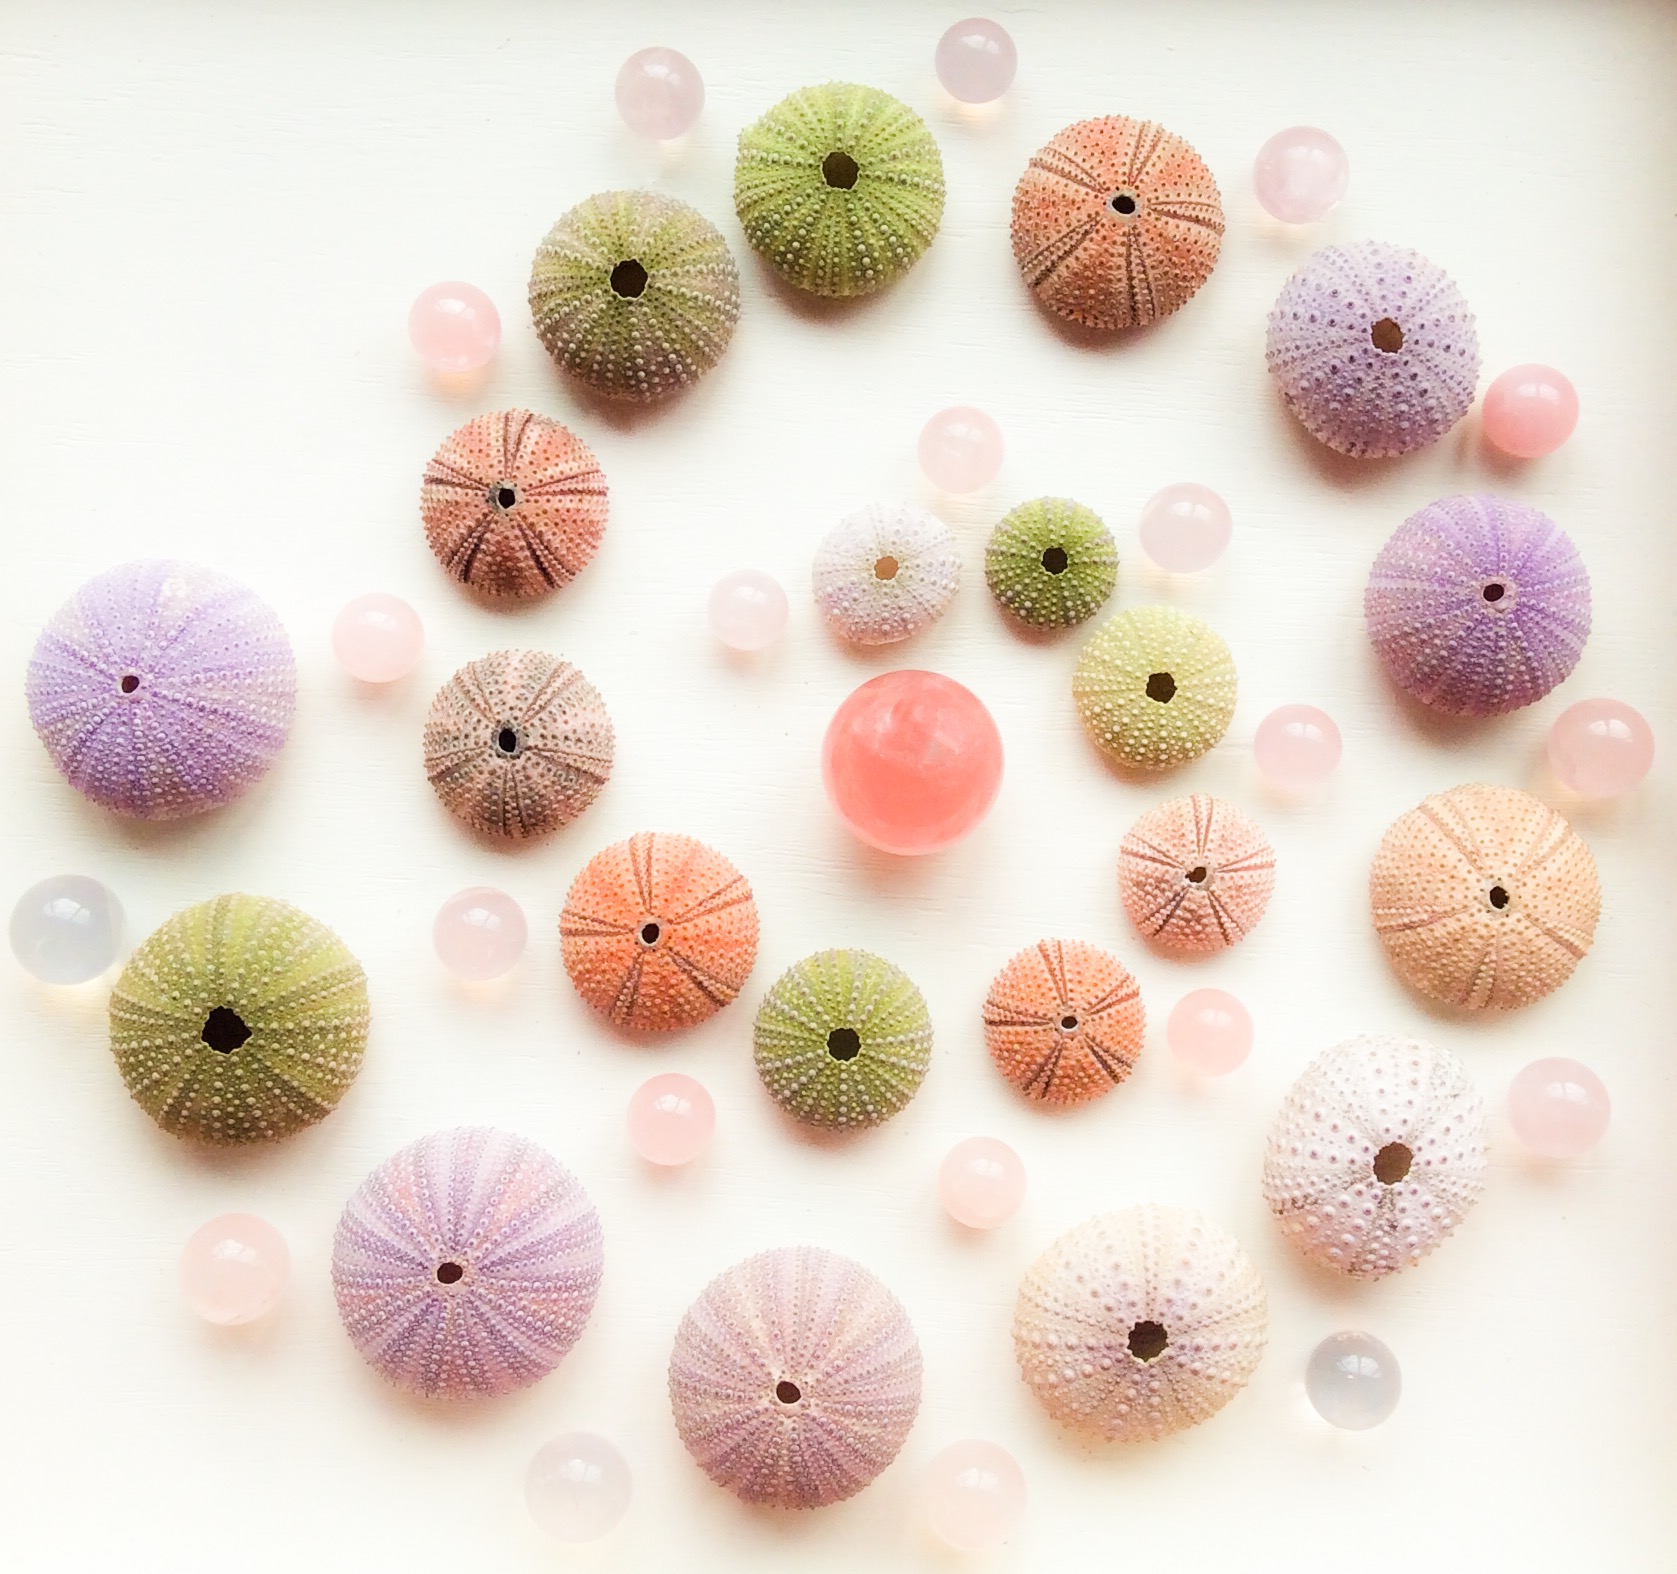 Star Rose Quartz, Rose Quartz, Pink Girasol and Sea Urchins